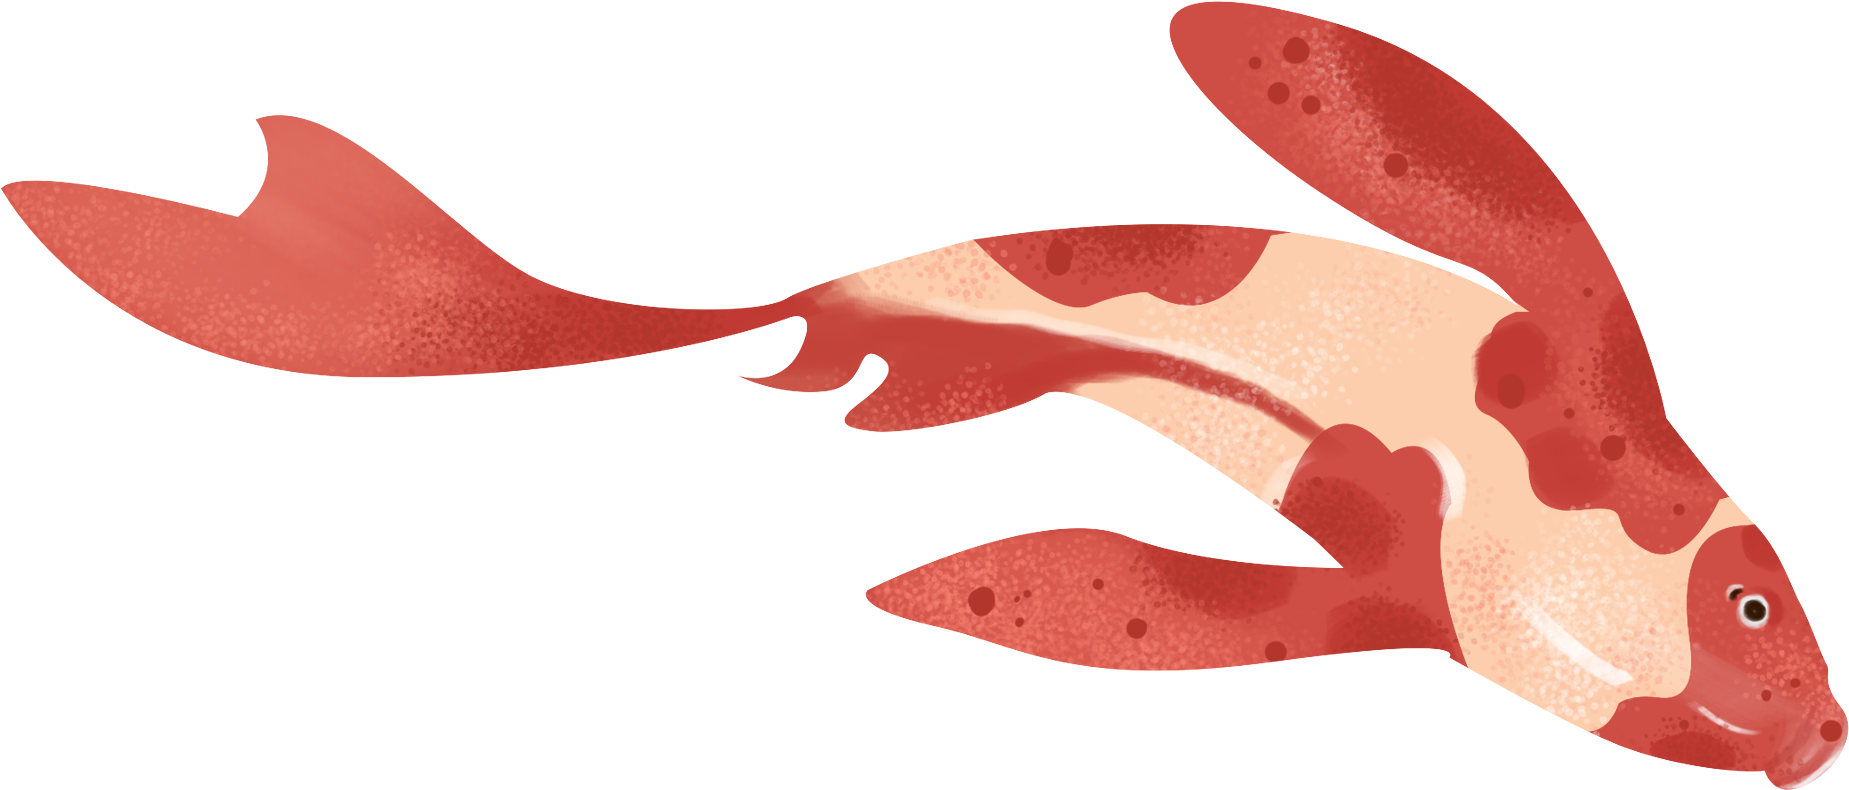 Redand White Koi Fish Illustration PNG image